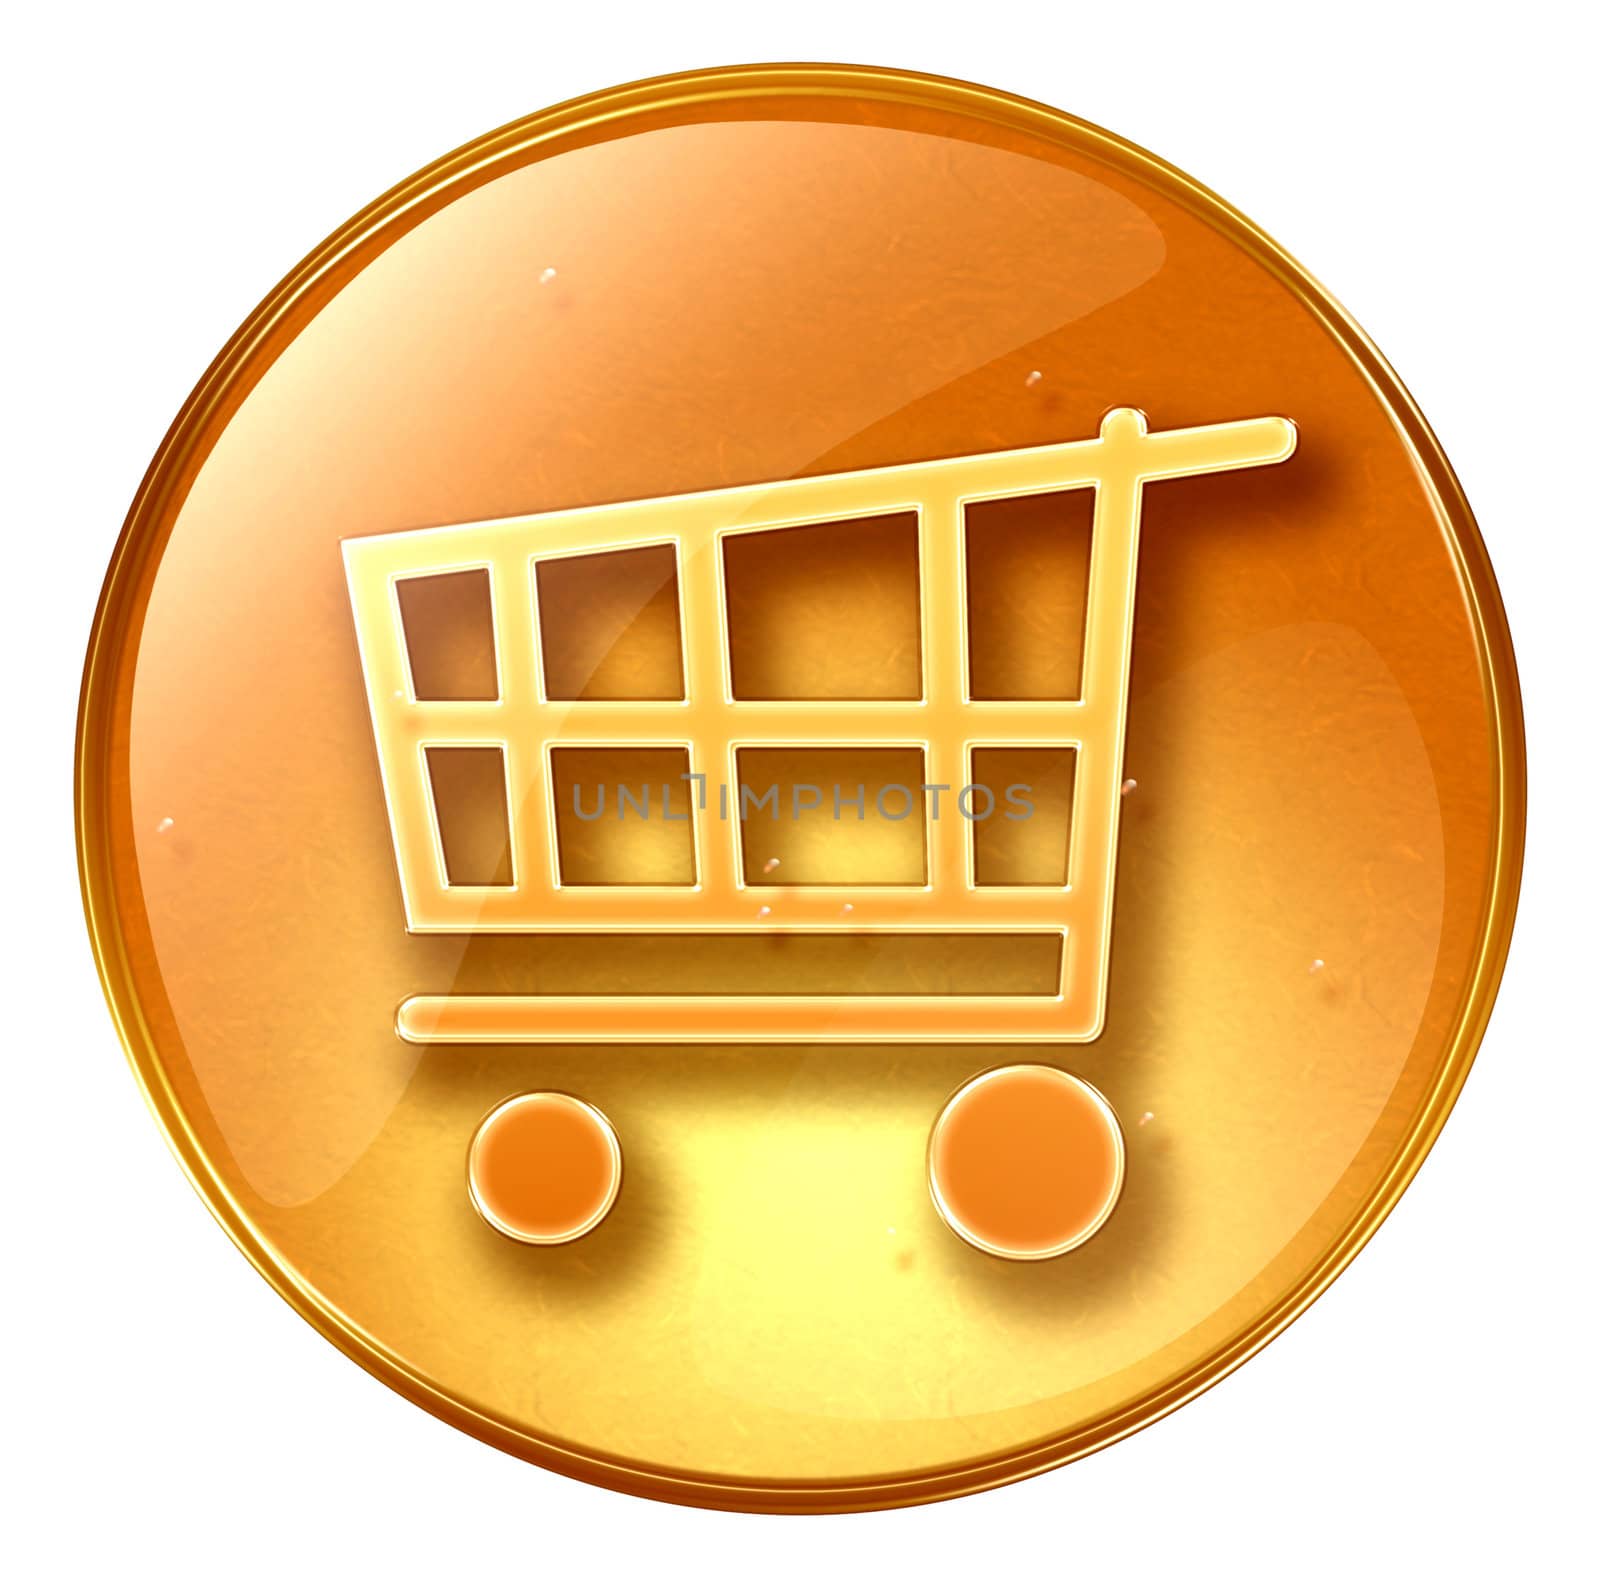 shopping cart icon yellow, isolated on white background.